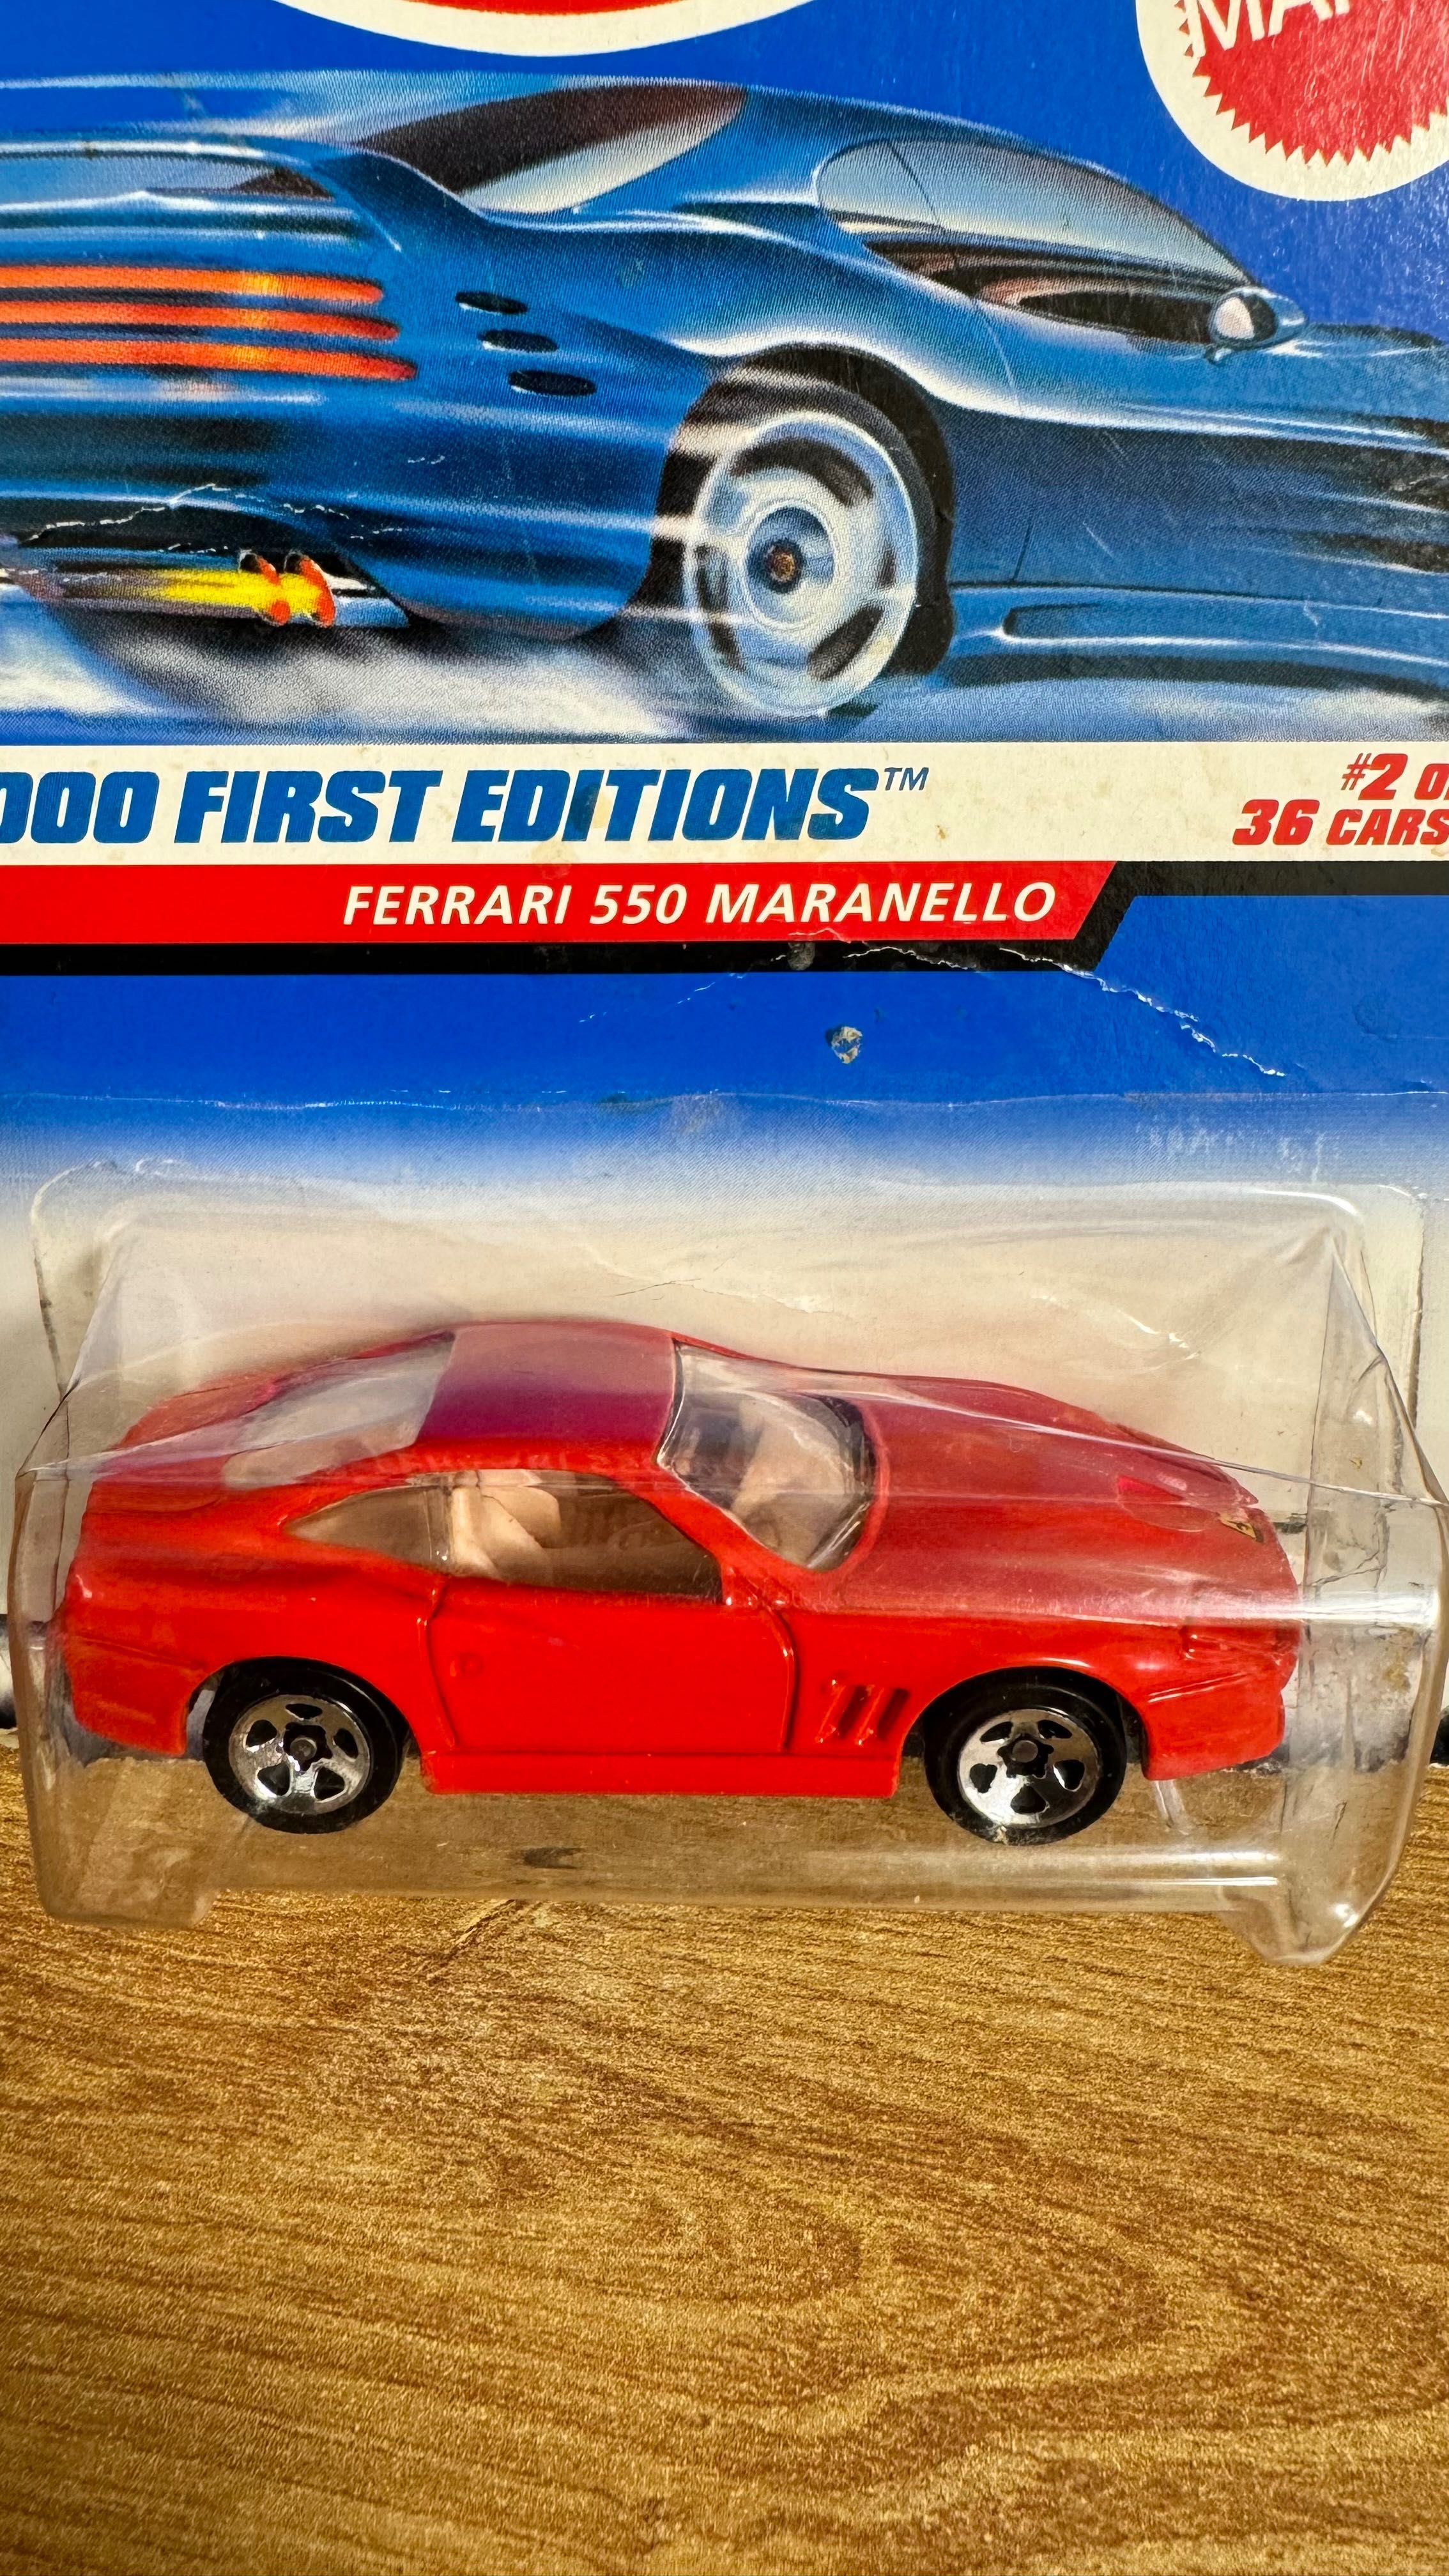 Ferrari Hot Wheels Maranello 550 red Феррари хотвилс